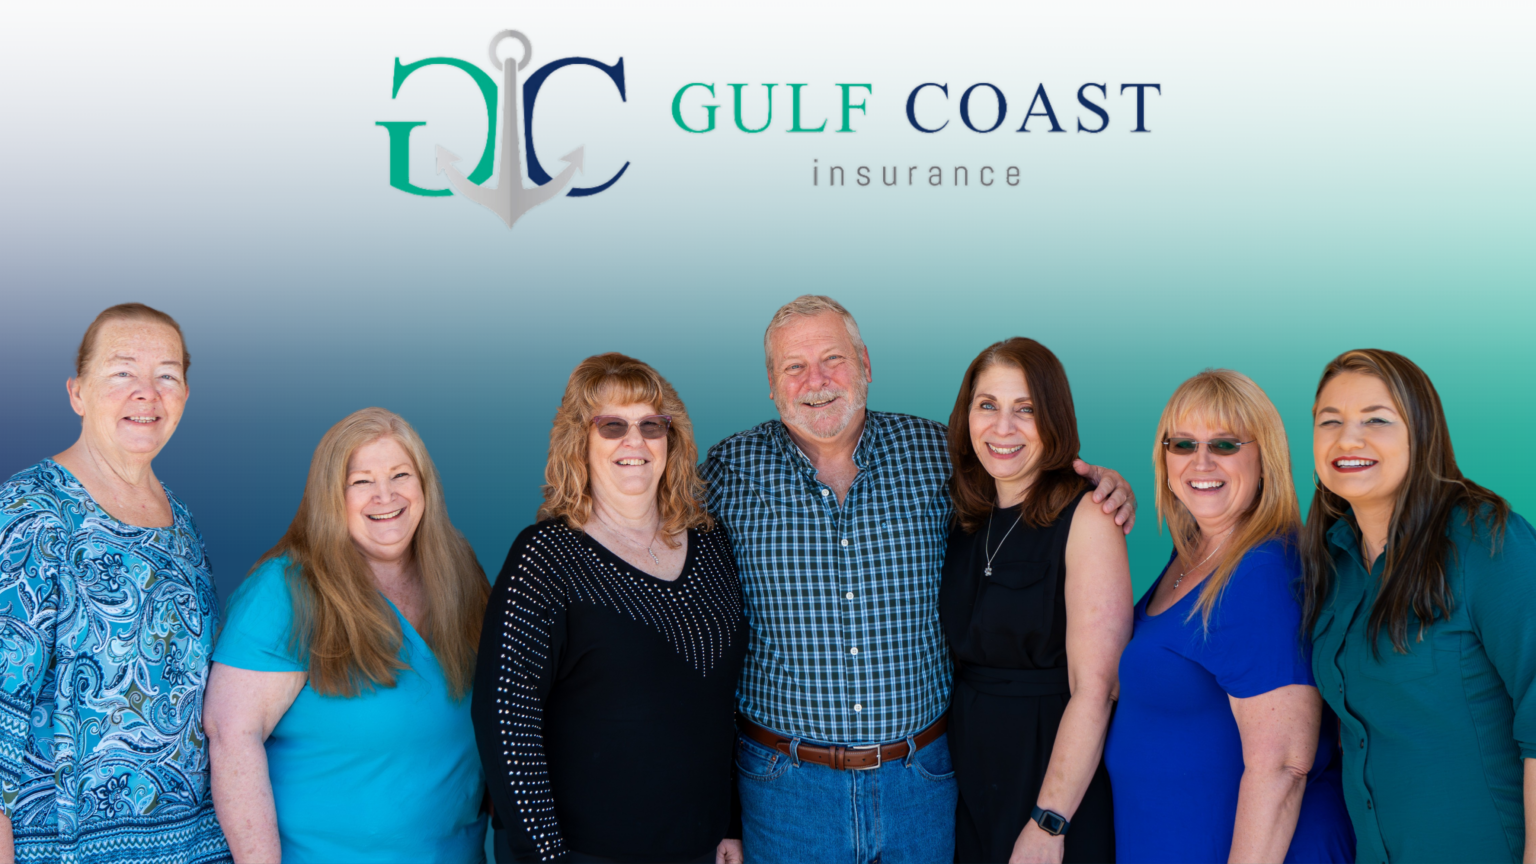 Gulf Coast Insurance Group Picture NEW EDIT